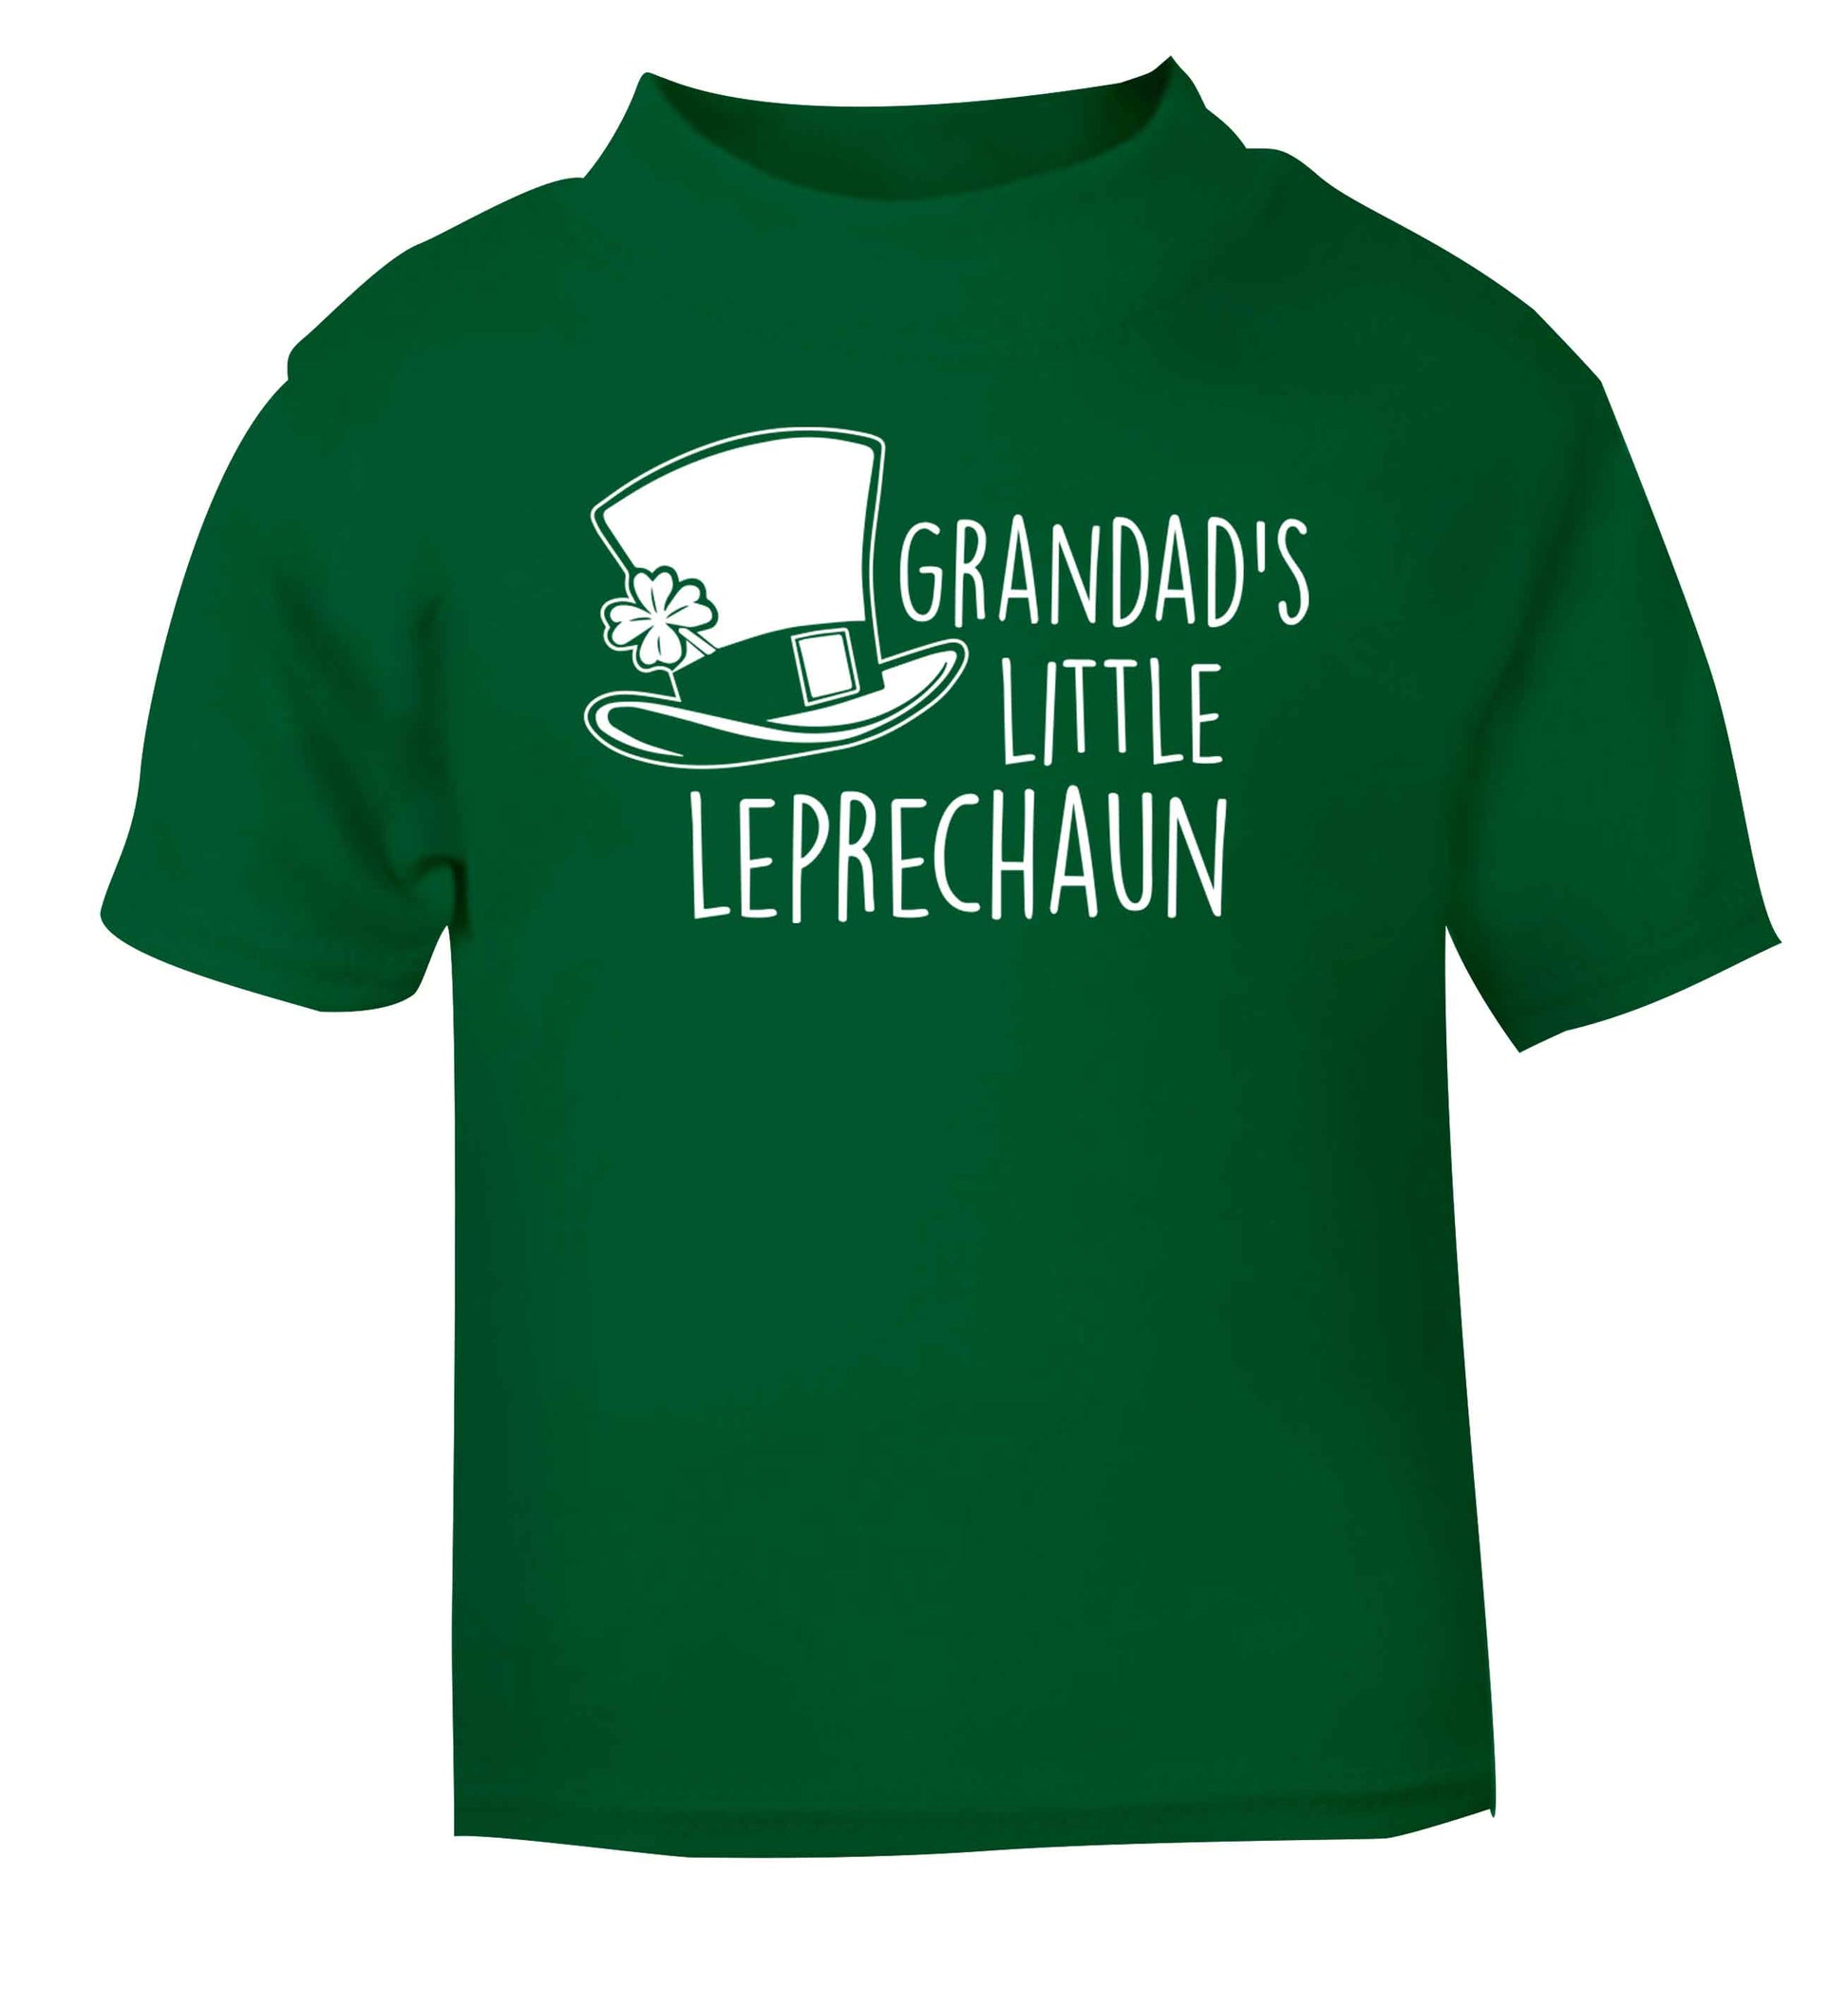 Grandad's little leprechaun green baby toddler Tshirt 2 Years